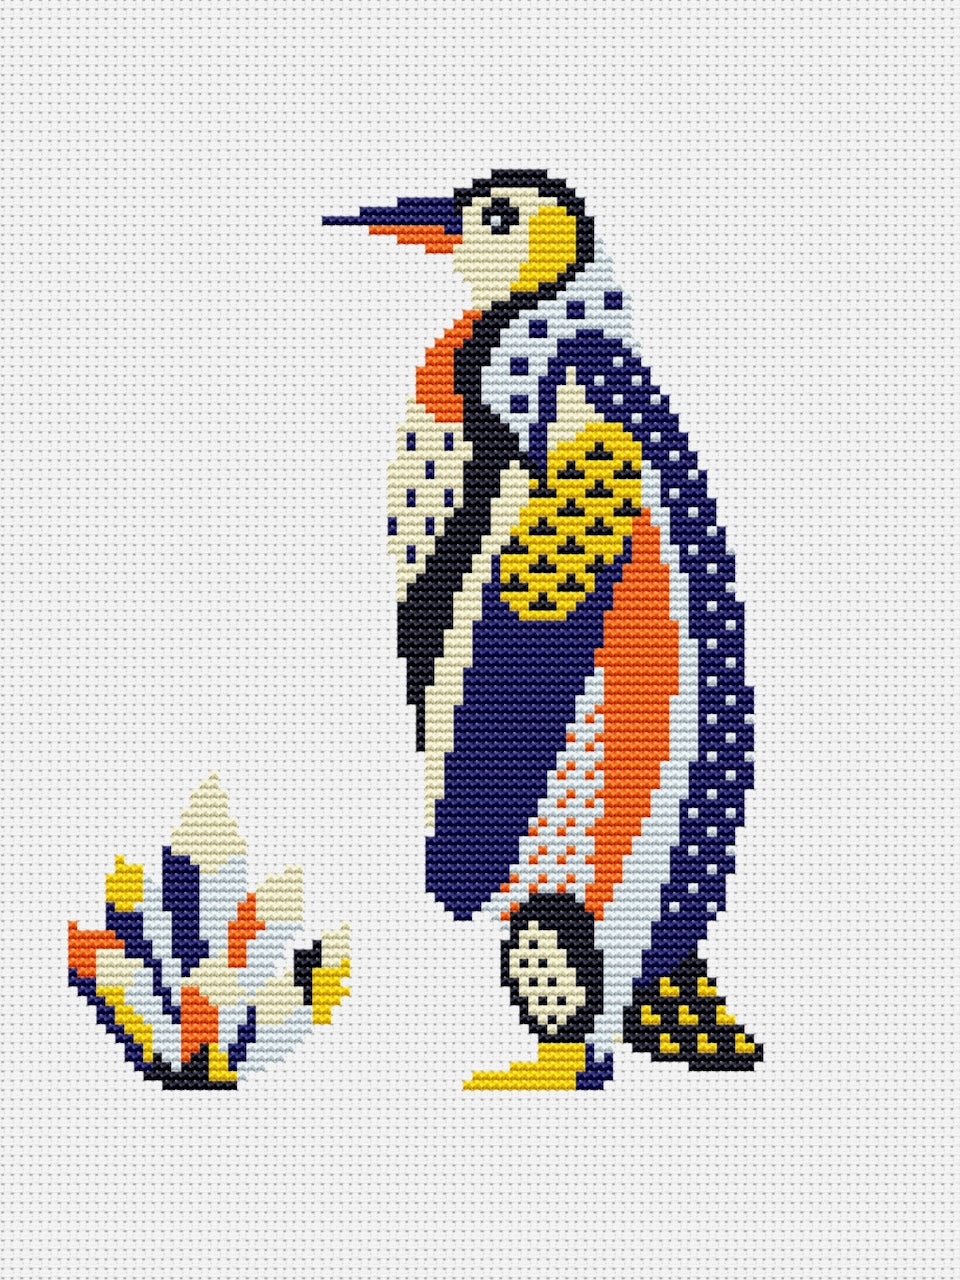 penguin cross stitch pattern